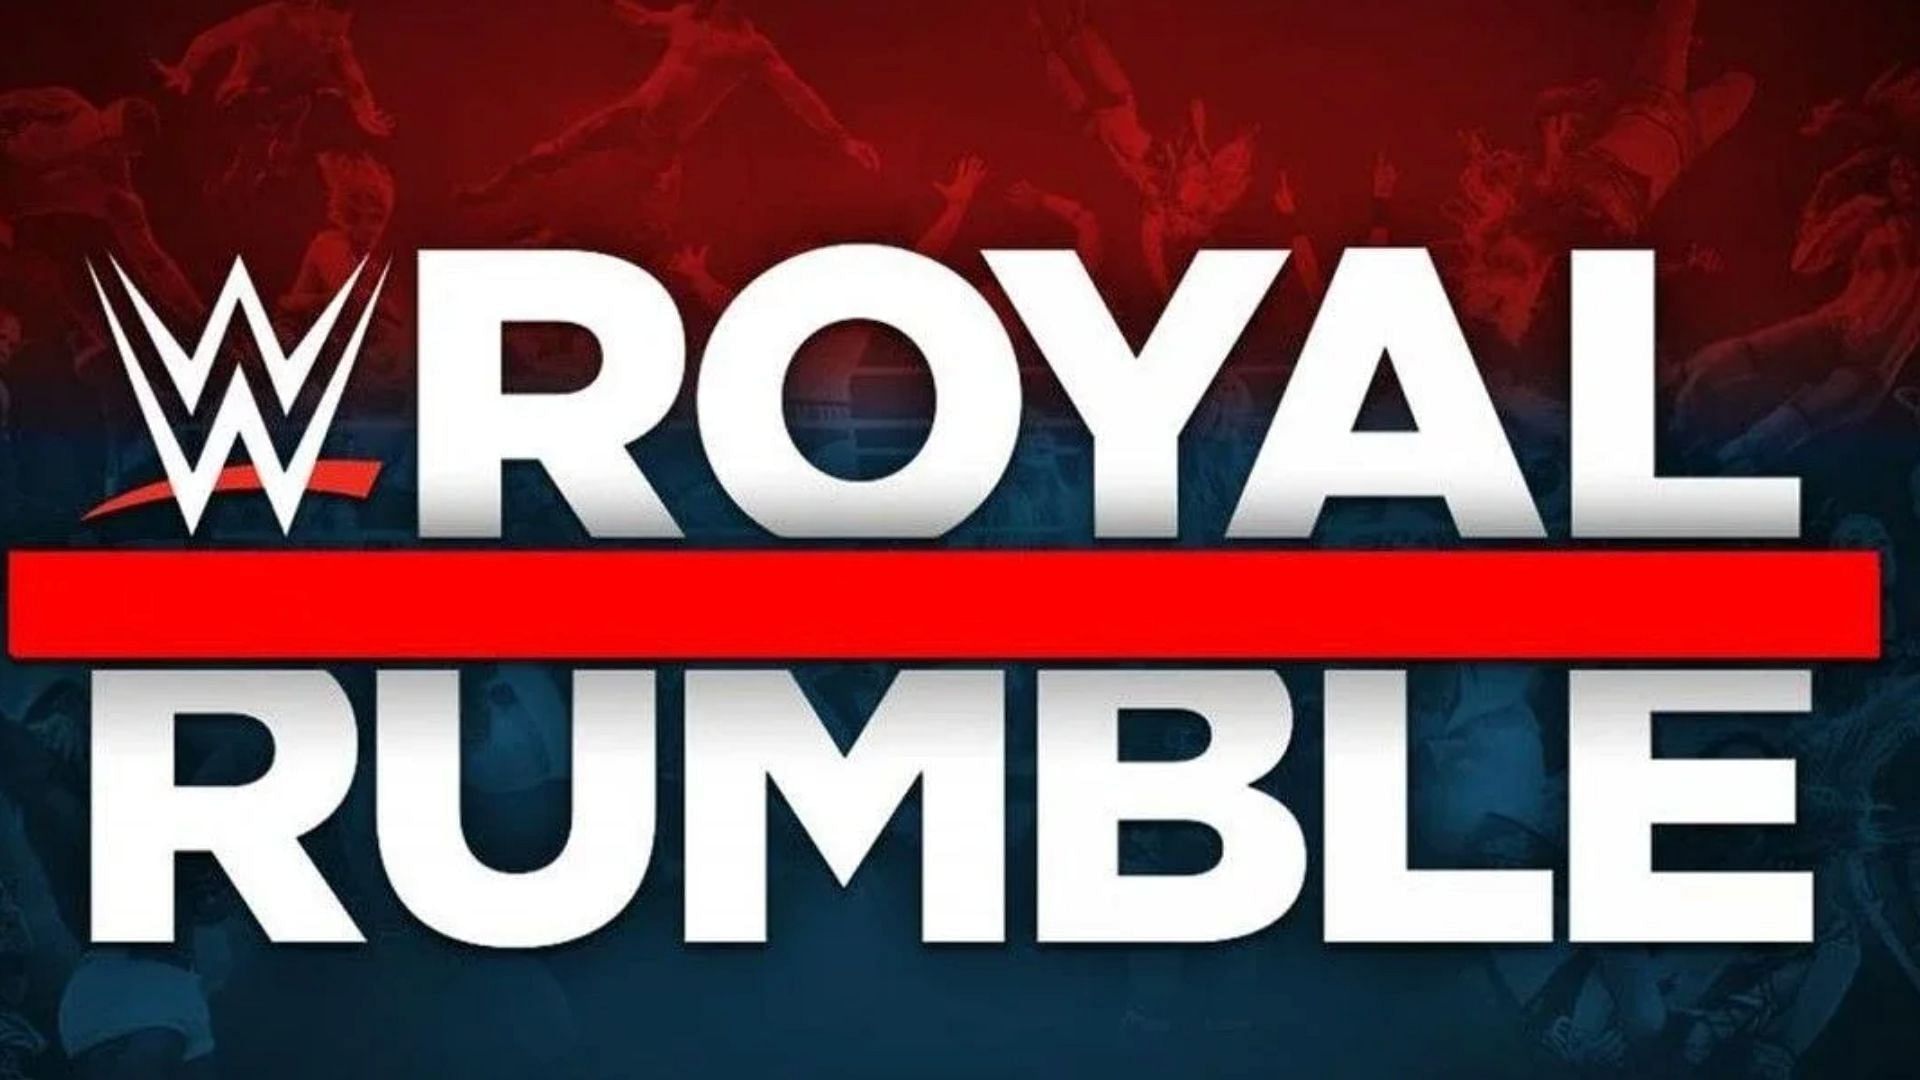 WWE Royal Rumble 2023 will be in San Antonio, Texas